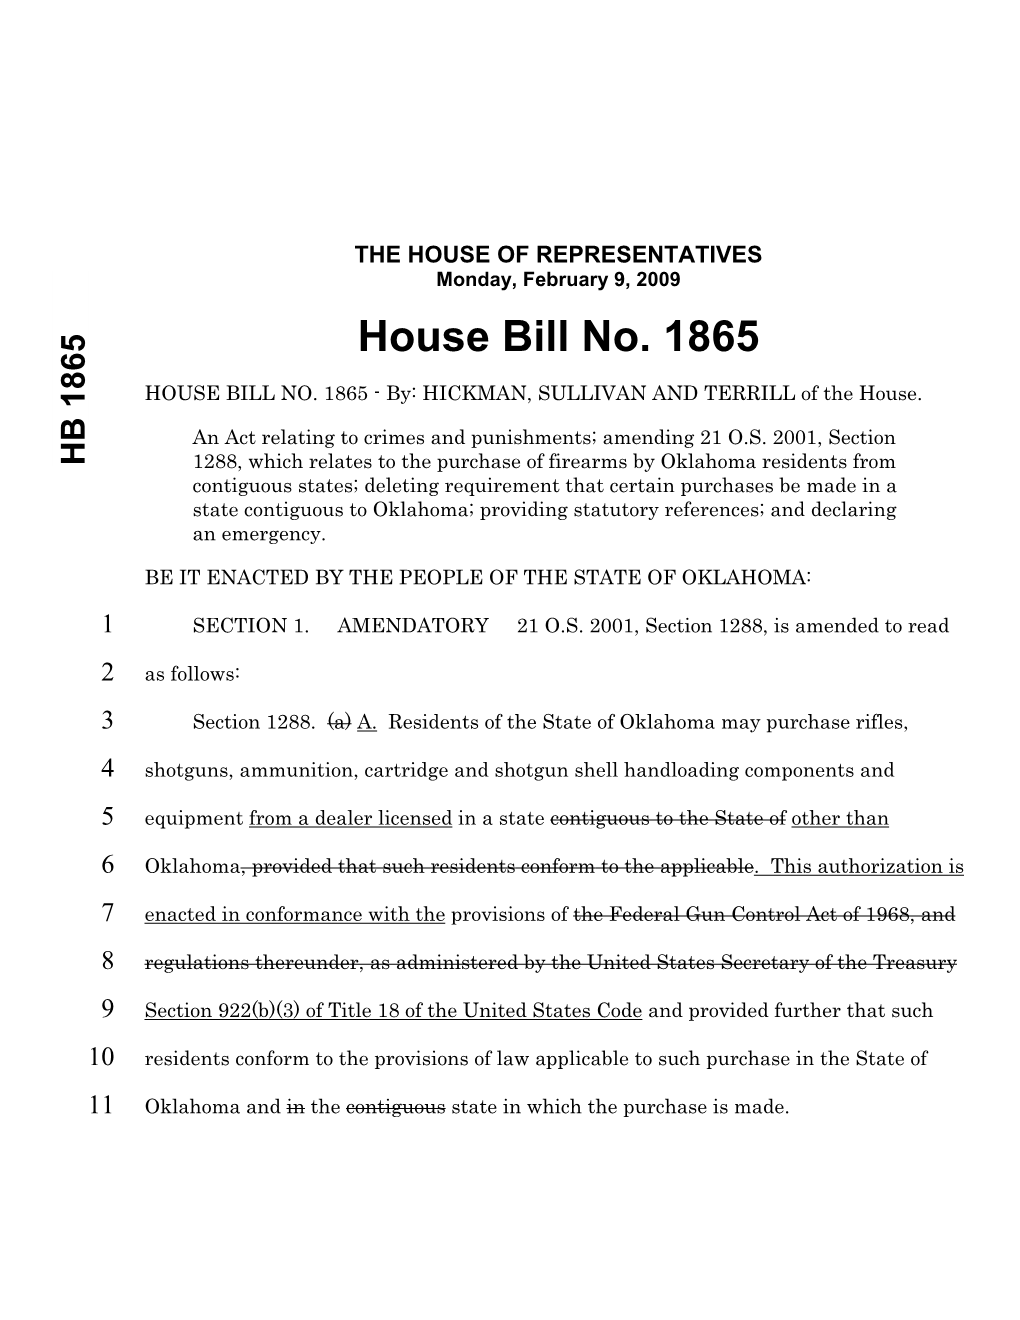 House Bill No. 1865